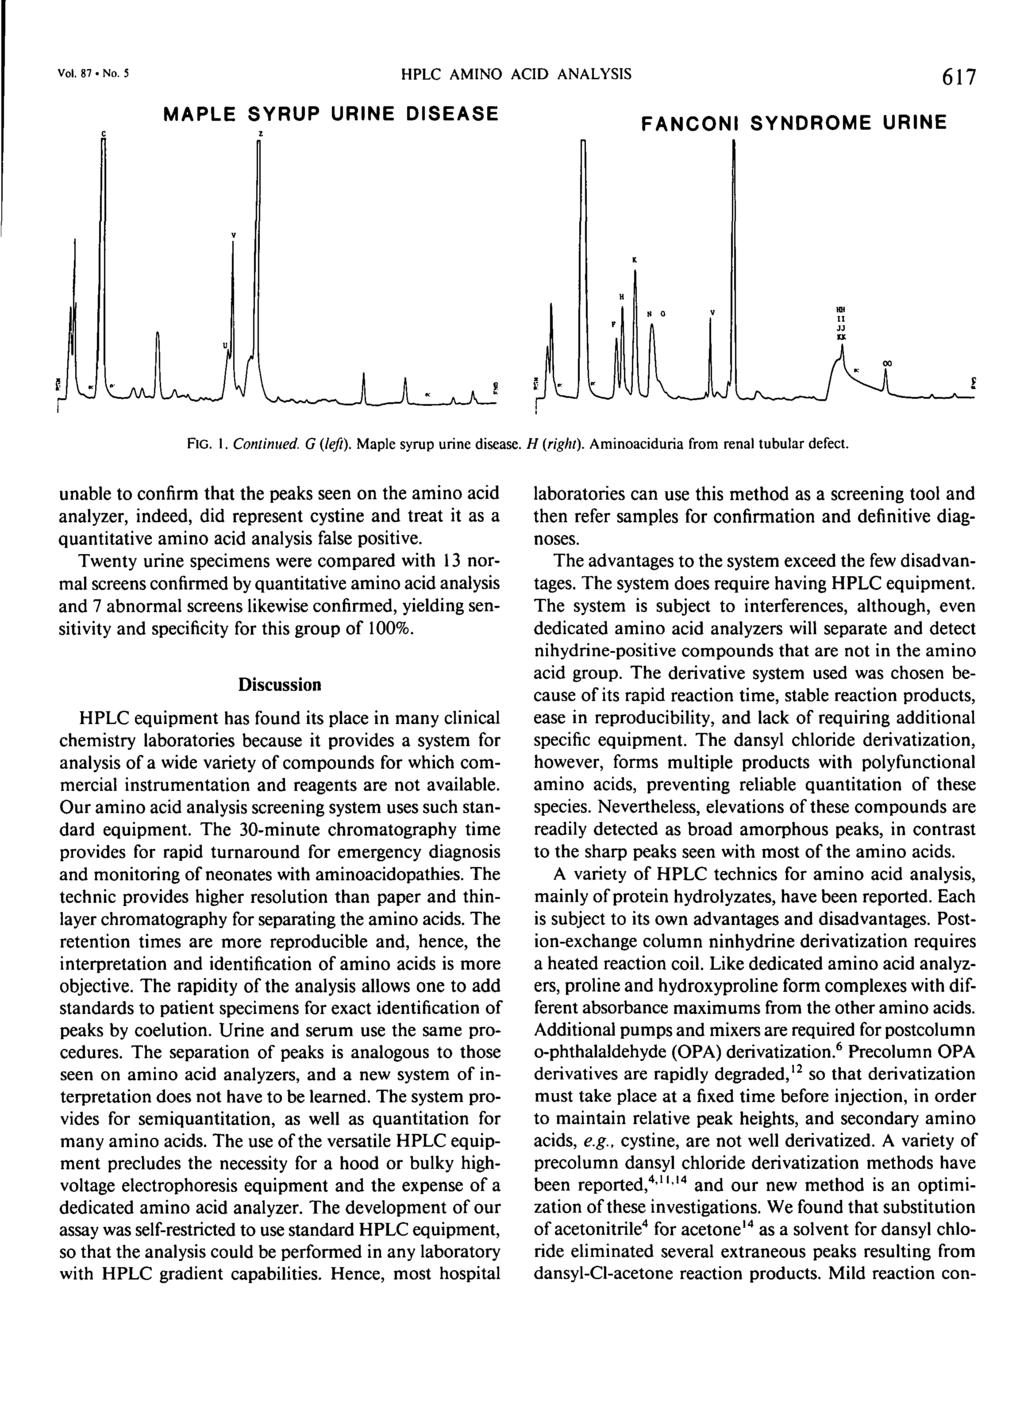 vol. 87-No. 5 MAPLE SYRUP URINE DISEASE HPLC AMINO ACID ANALYSIS FANCONI SYNDROME URINE 617 t M FIG. 1. Continued. G (left). Maple syrup urine disease. H (right).